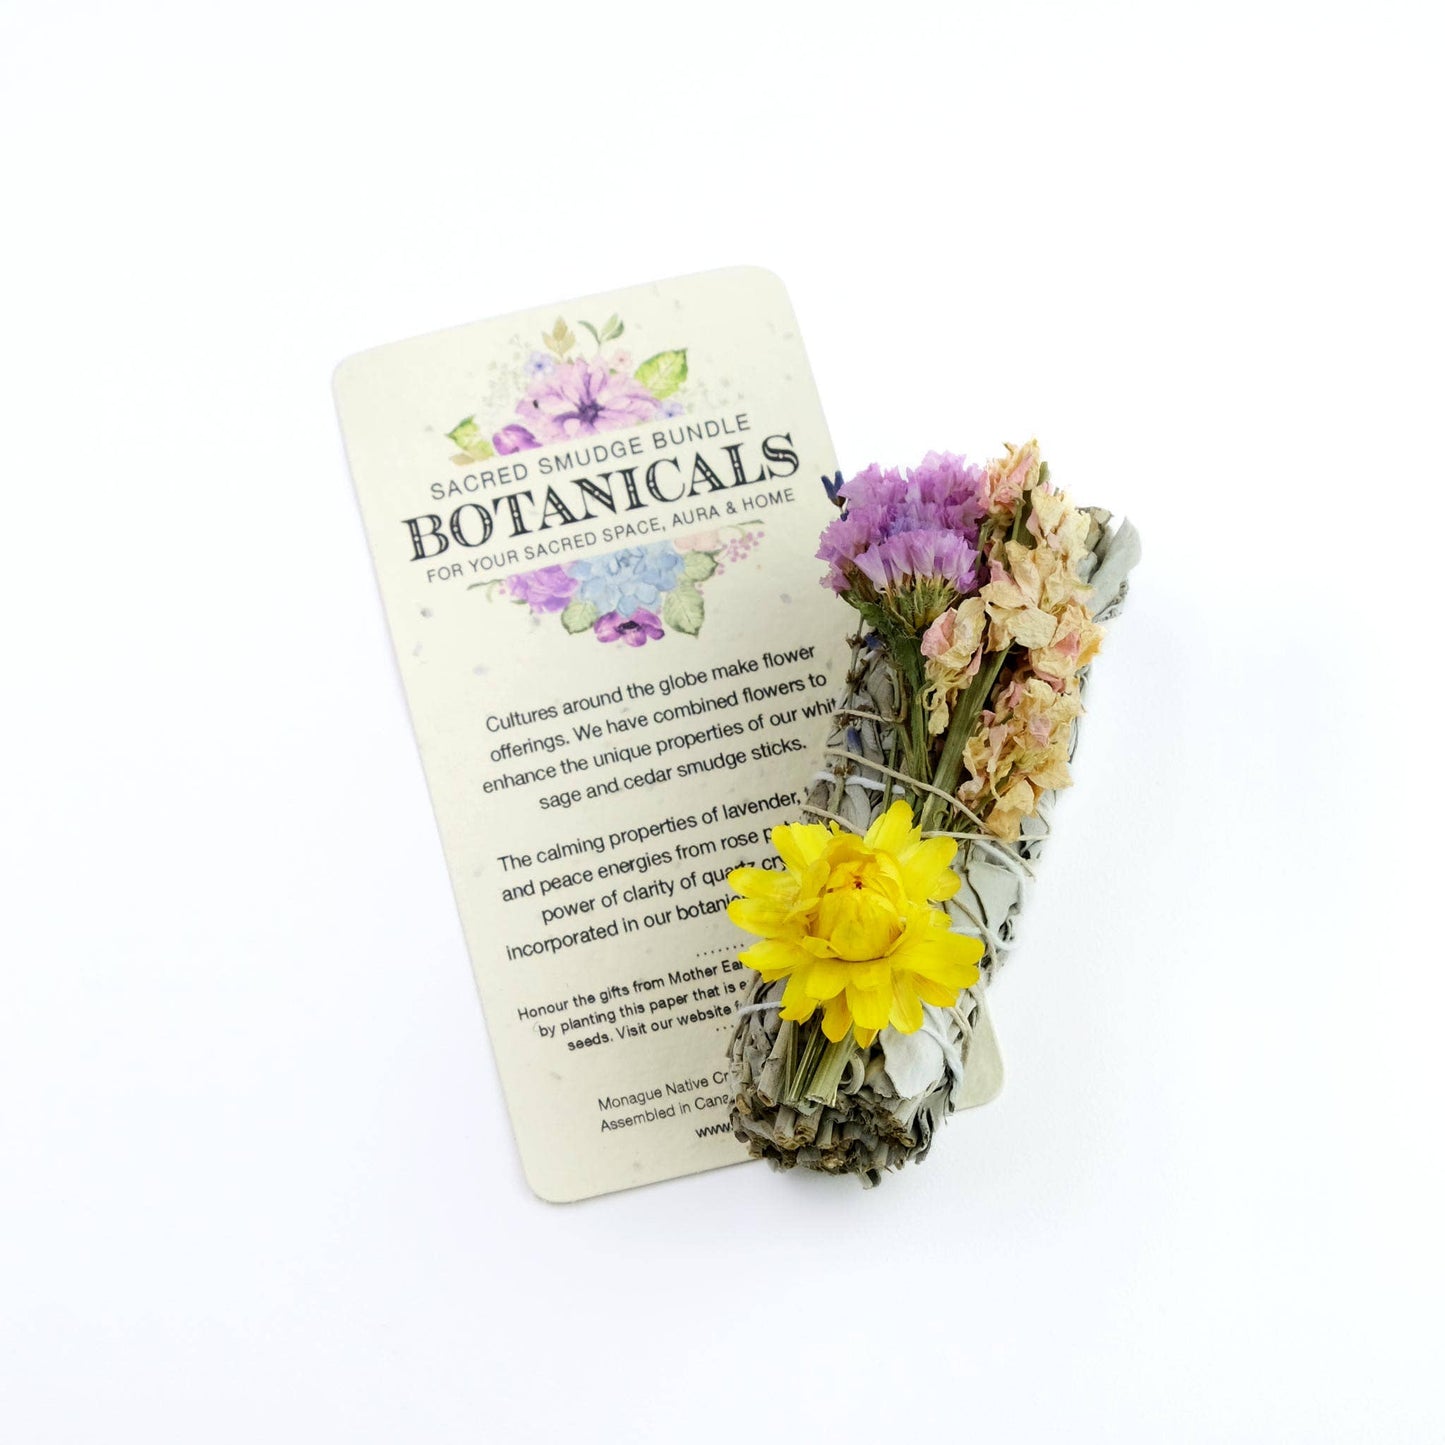 Botanical Small Sage Smudge Bundle with Strawflower & Lavender